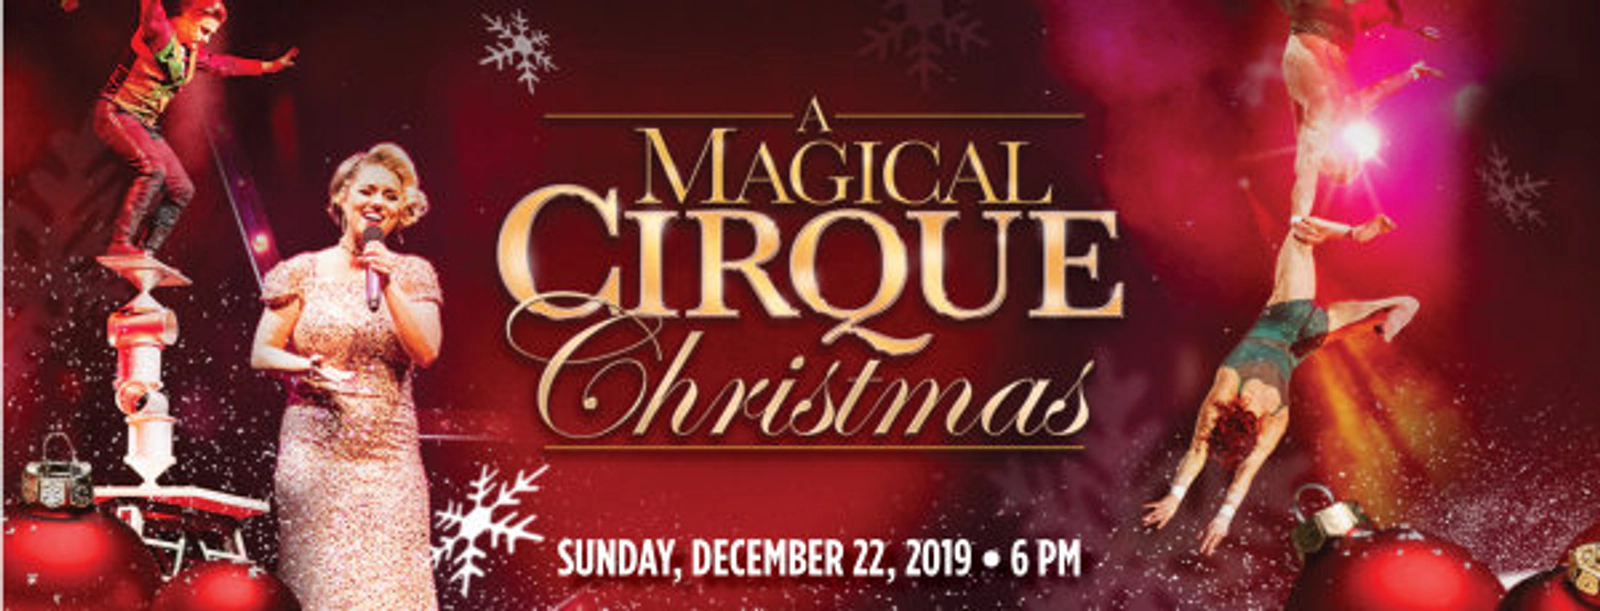 Christmas in July - A Magical Cirque Christmas! - Thumbnail Image